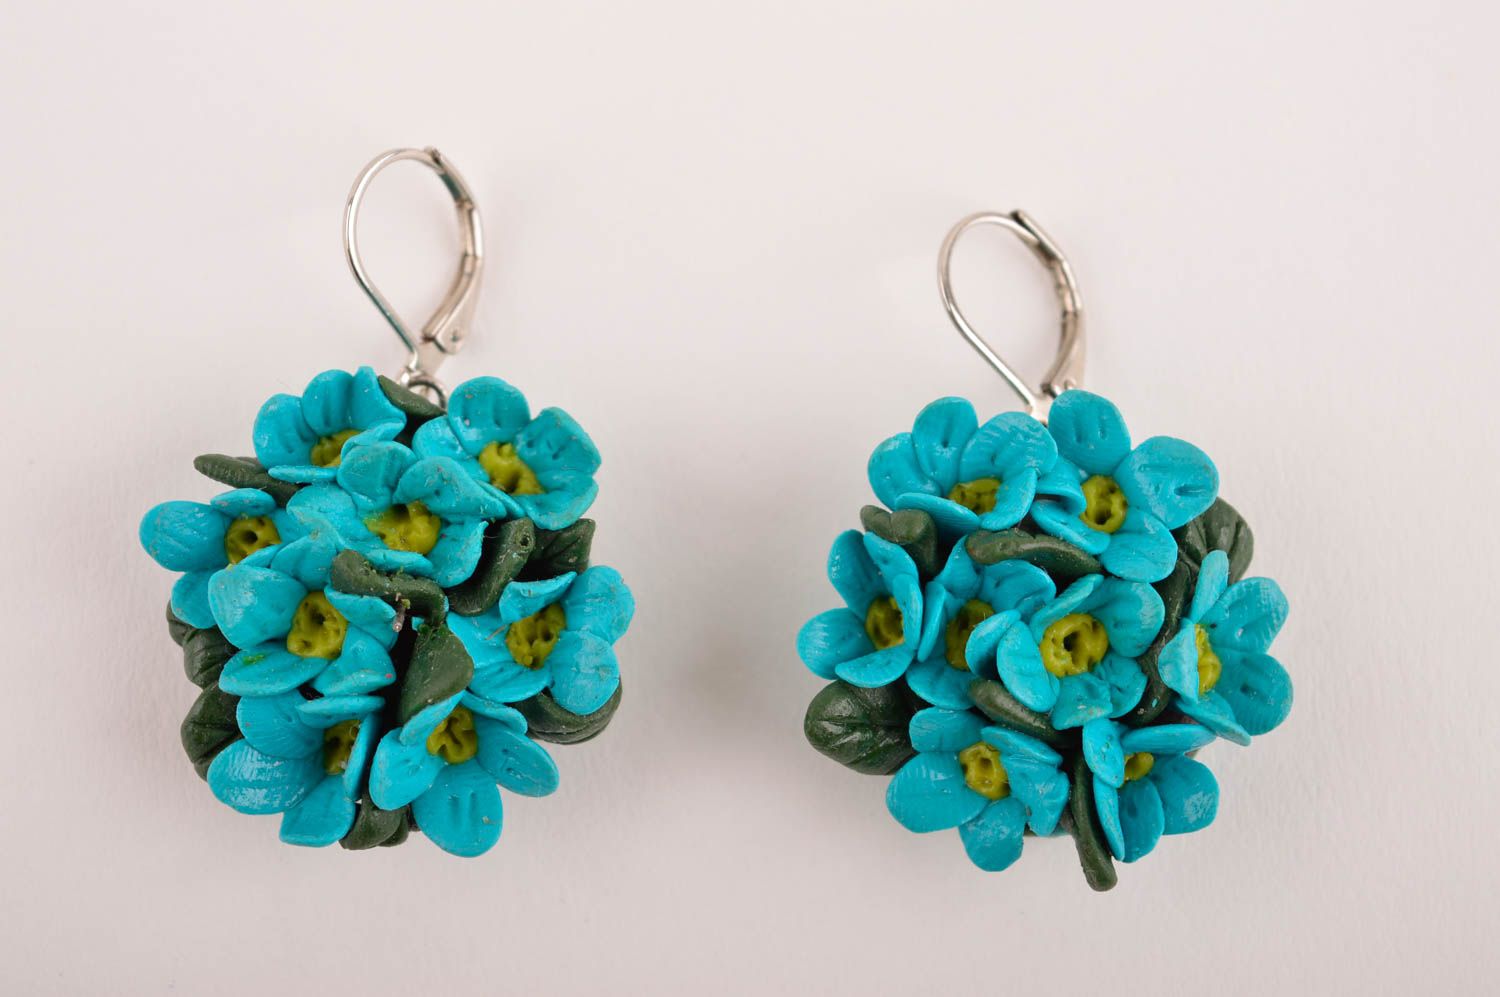 Handmade earrings polymer clay earrings unusual accessory for women gift ideas photo 3